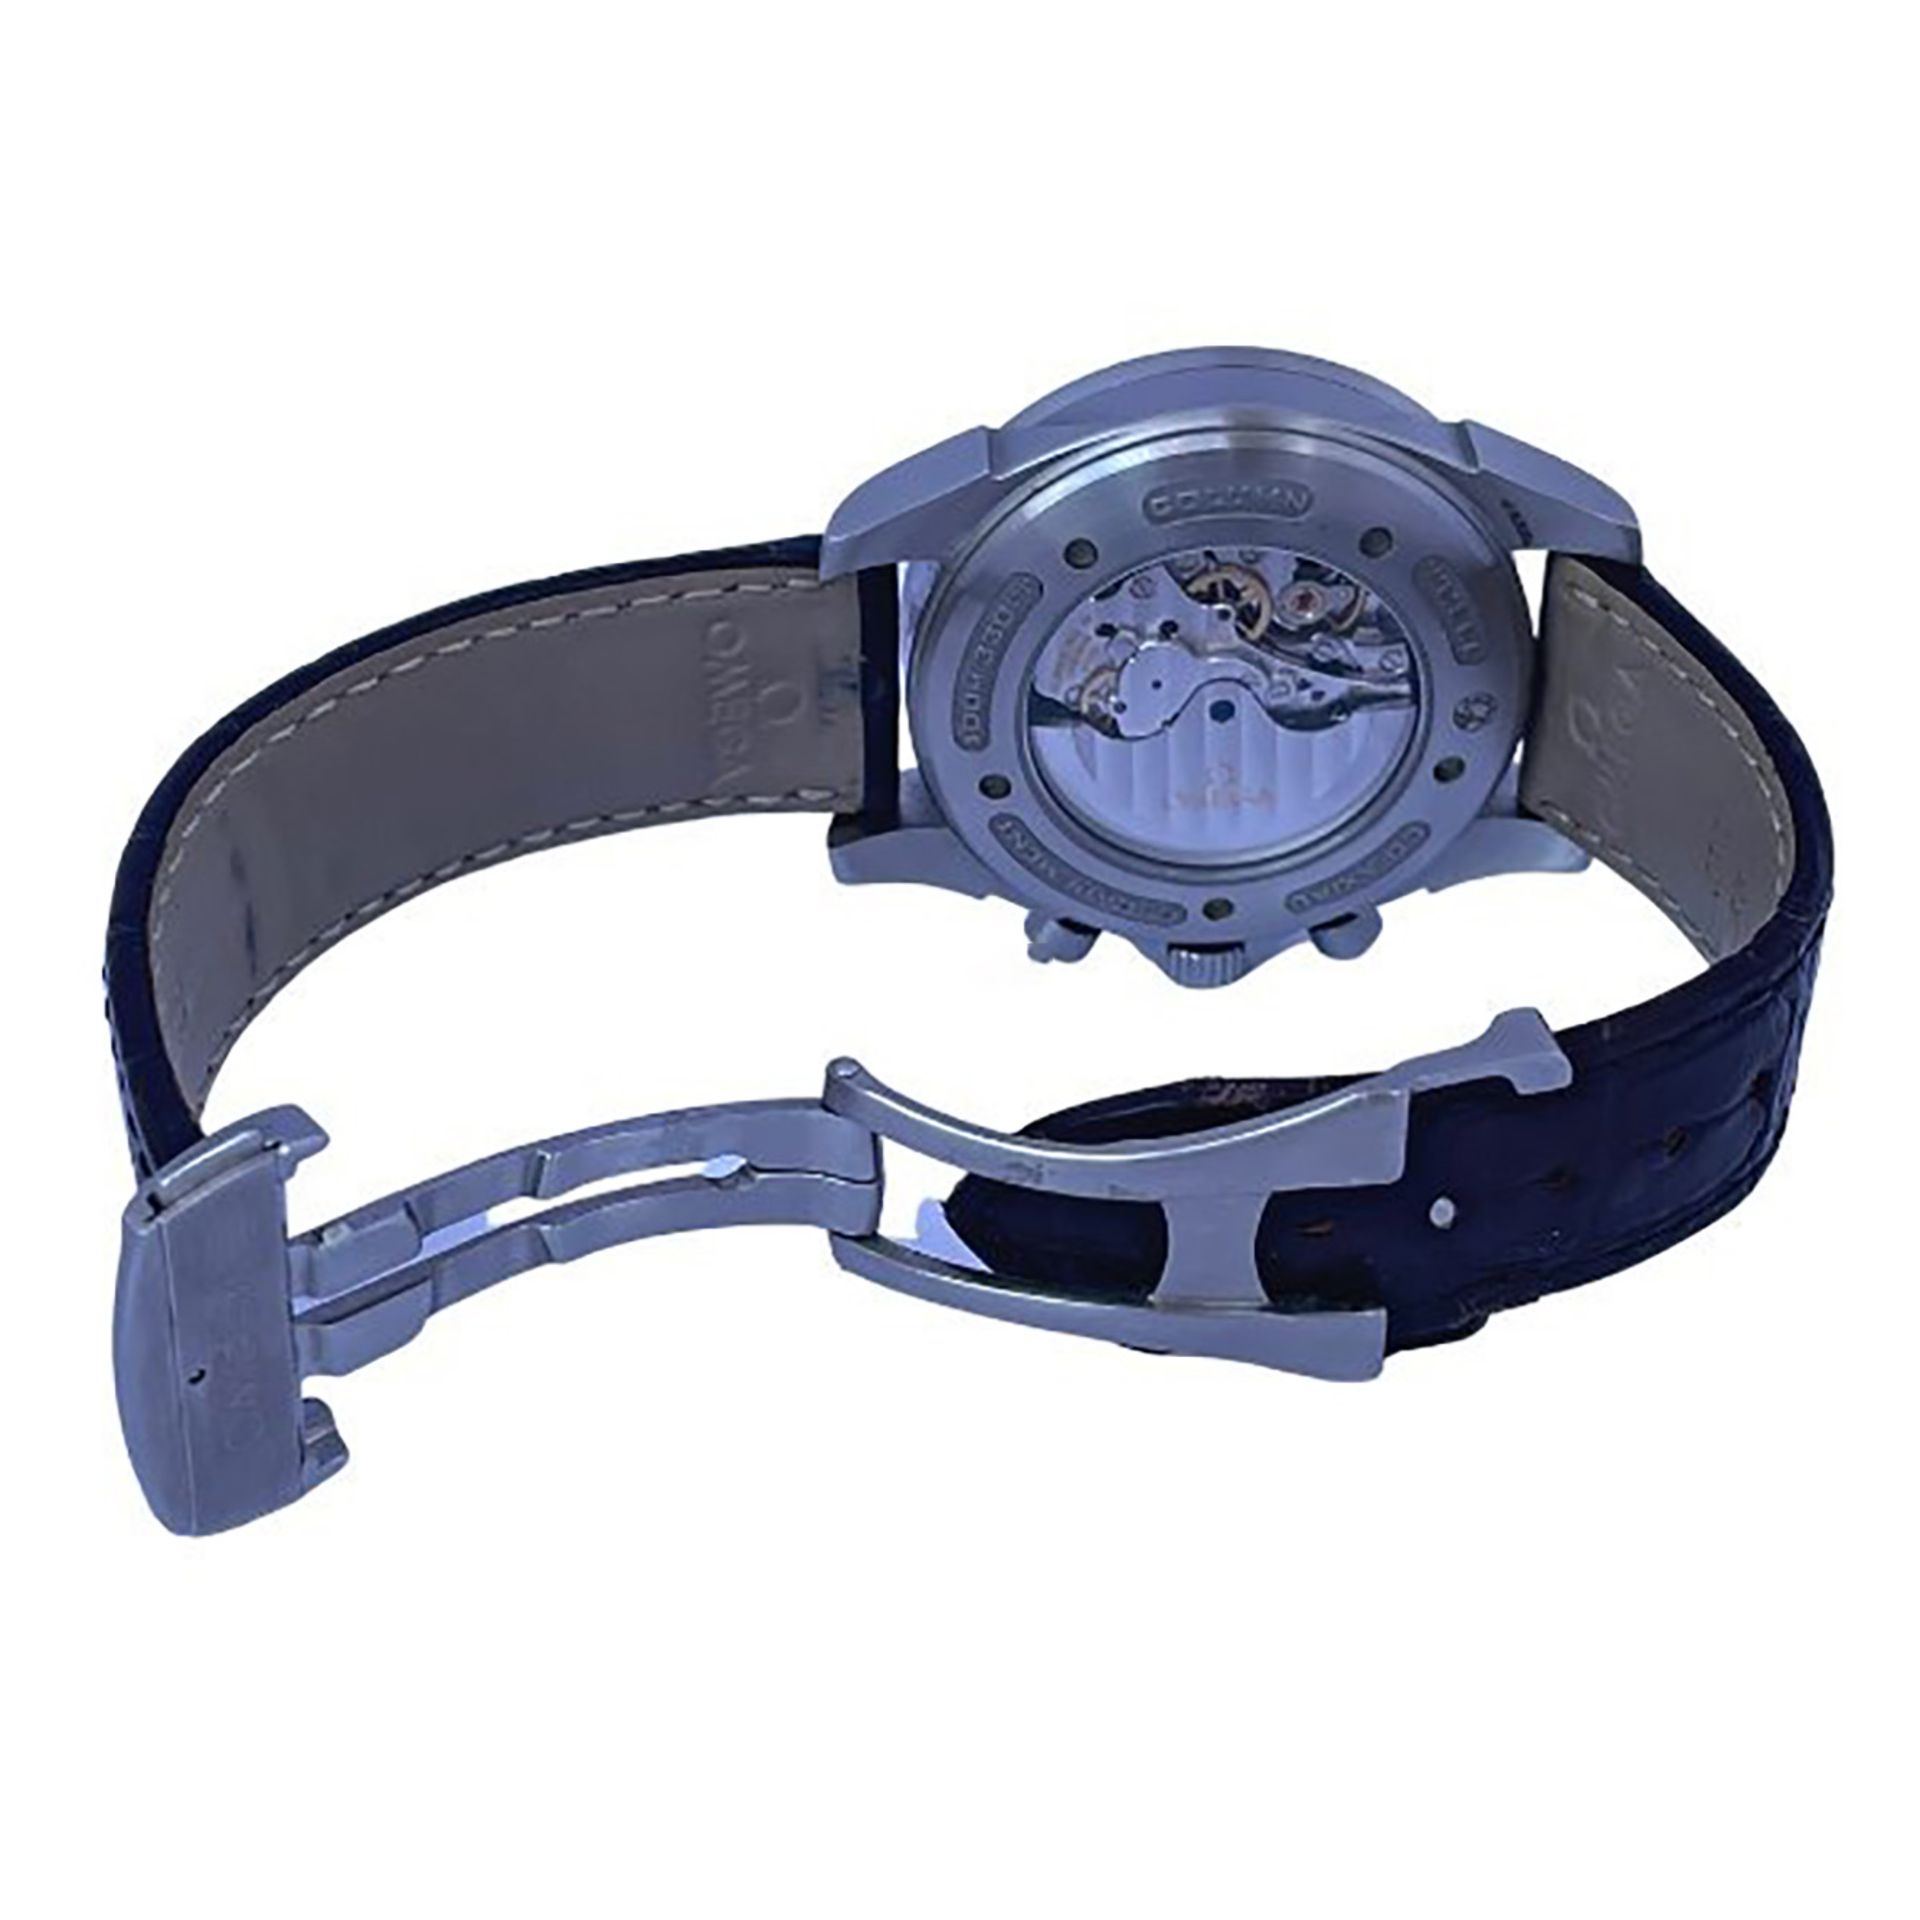 Omega De Ville Co-Axial Chronoscope wristwatch - Image 6 of 6